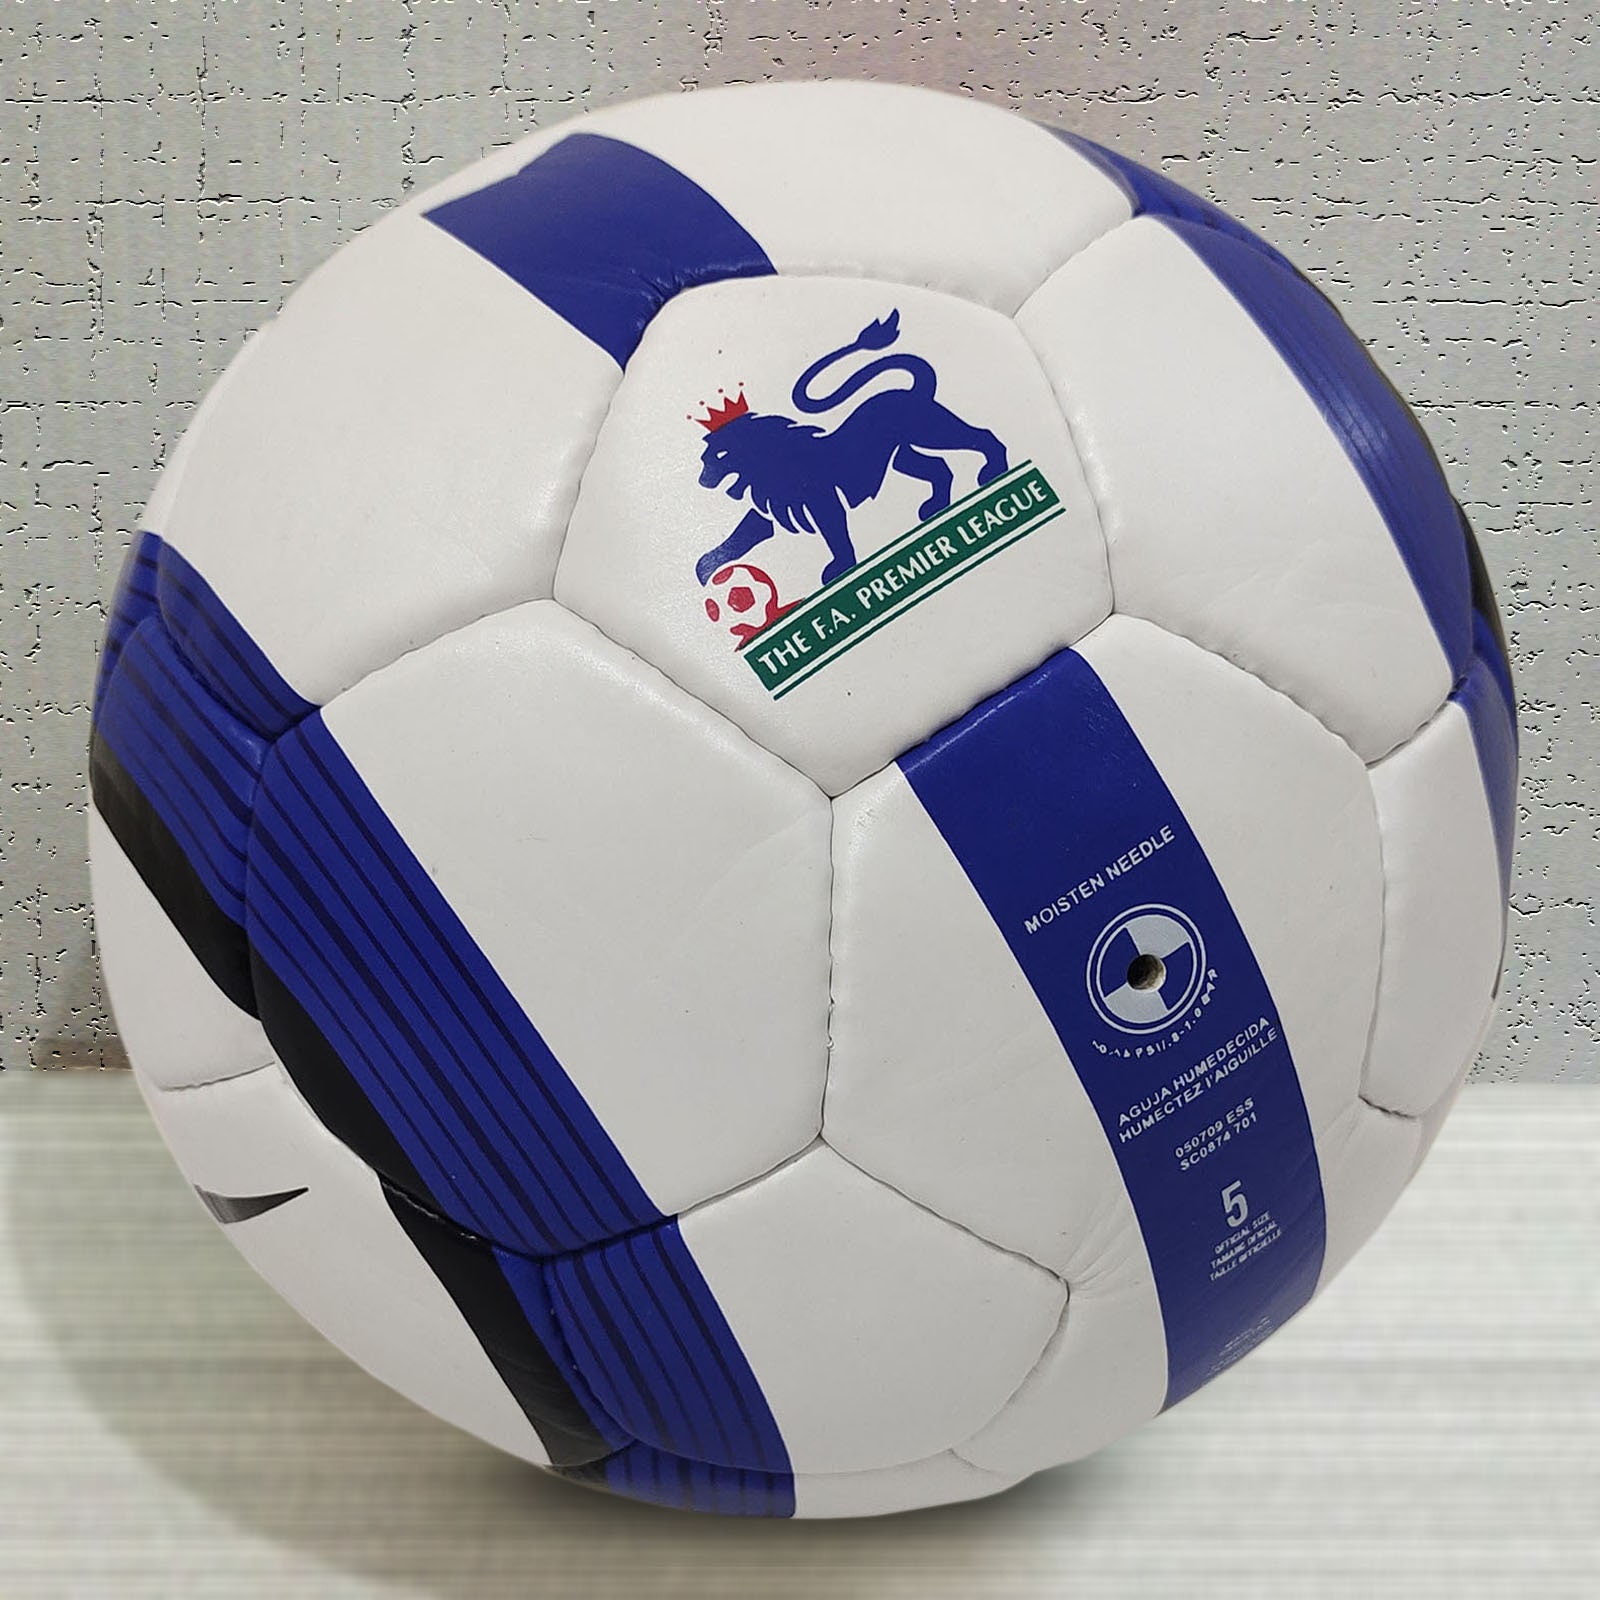 T90 Aerow Super Rare P/league Soccer Ball OMB - Etsy